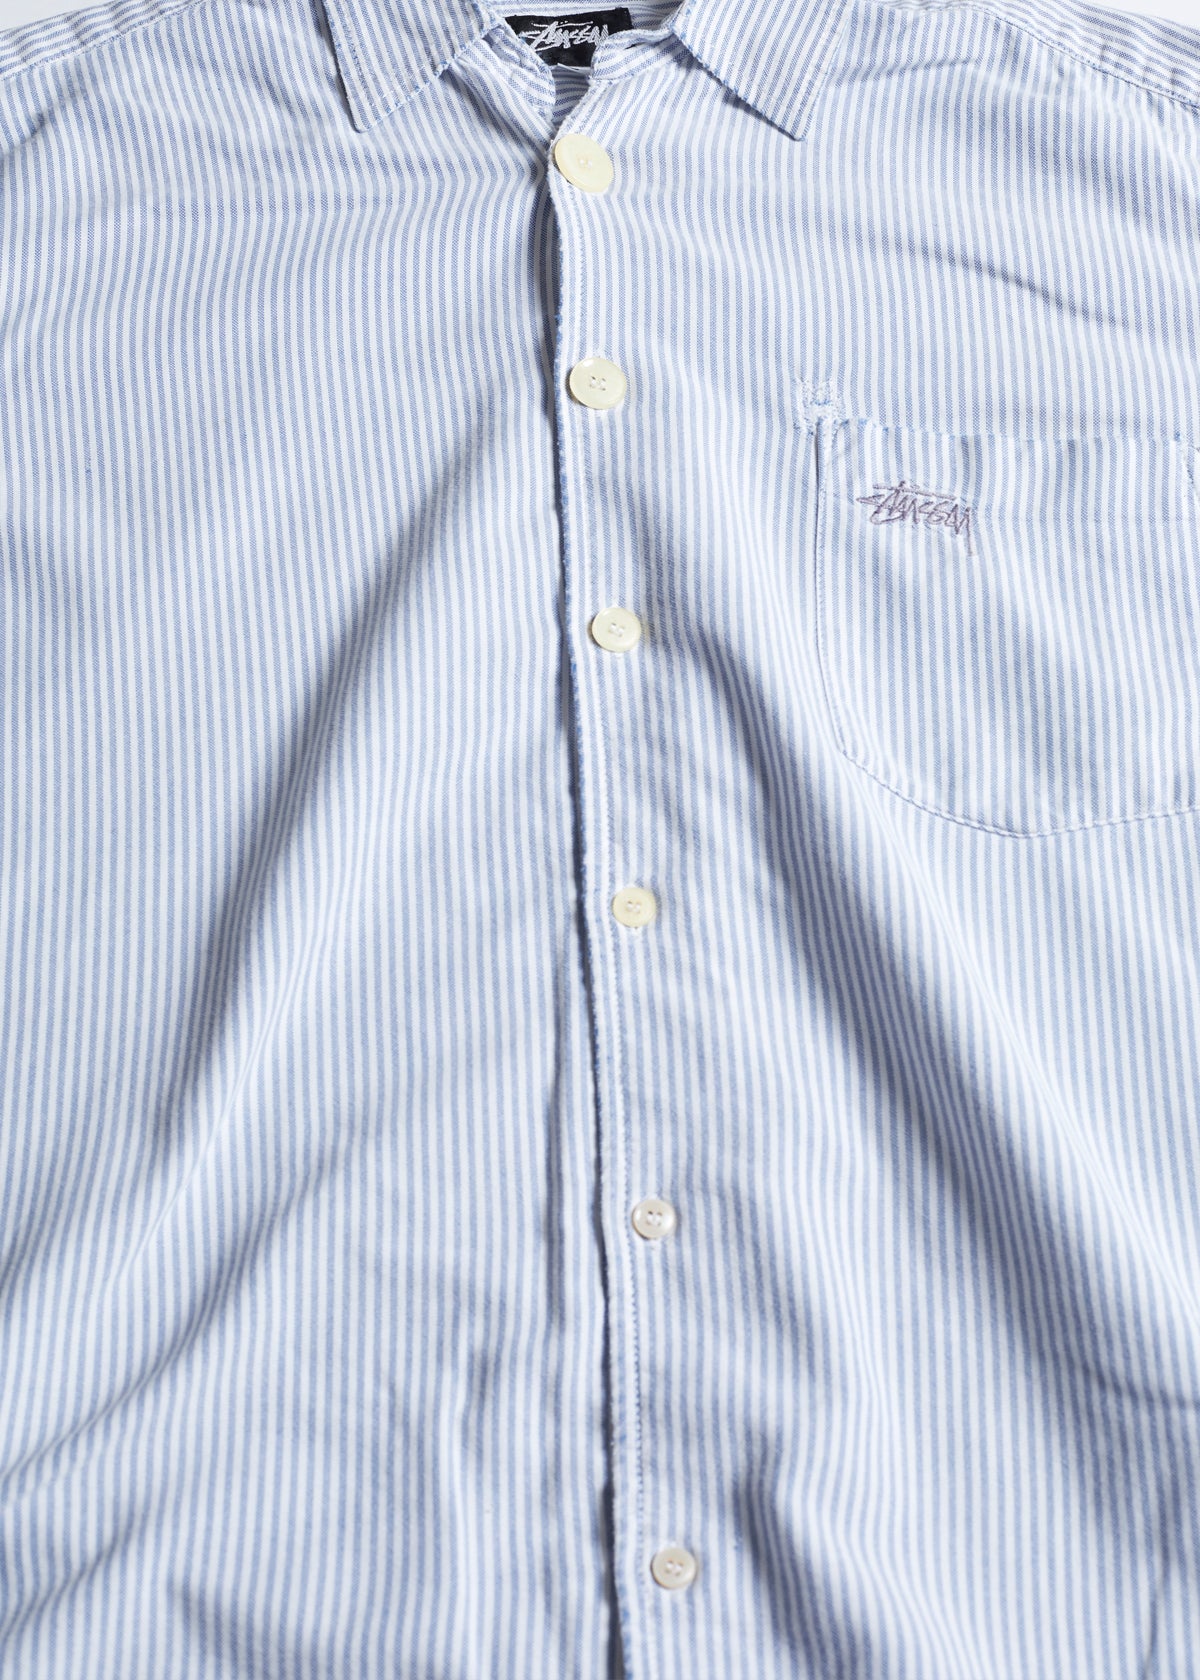 Graduated Button Shirt 1988 - Medium - The Archivist Store